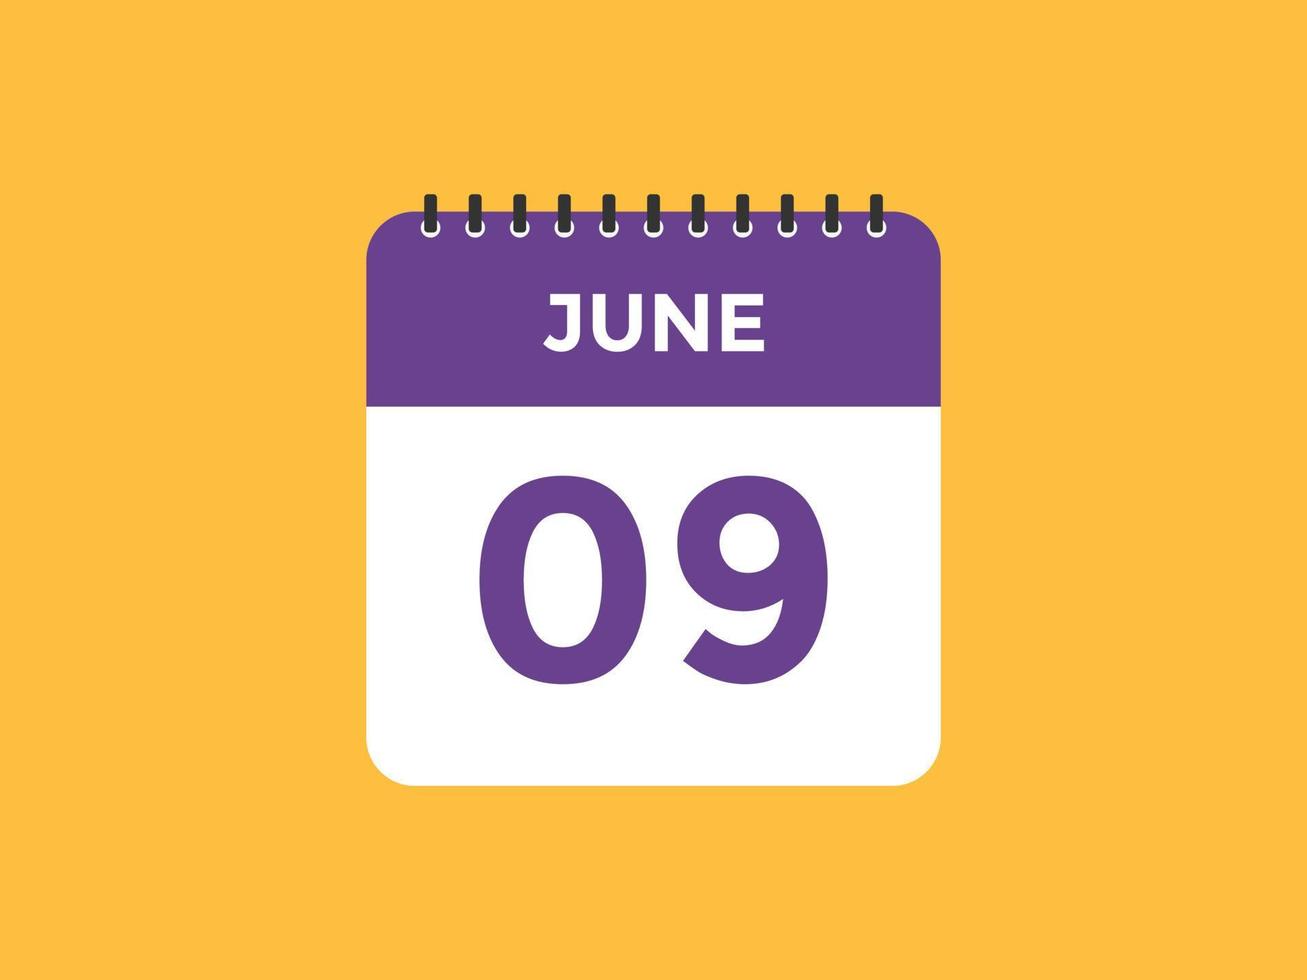 juni 9 kalender påminnelse. 9:e juni dagligen kalender ikon mall. kalender 9:e juni ikon design mall. vektor illustration